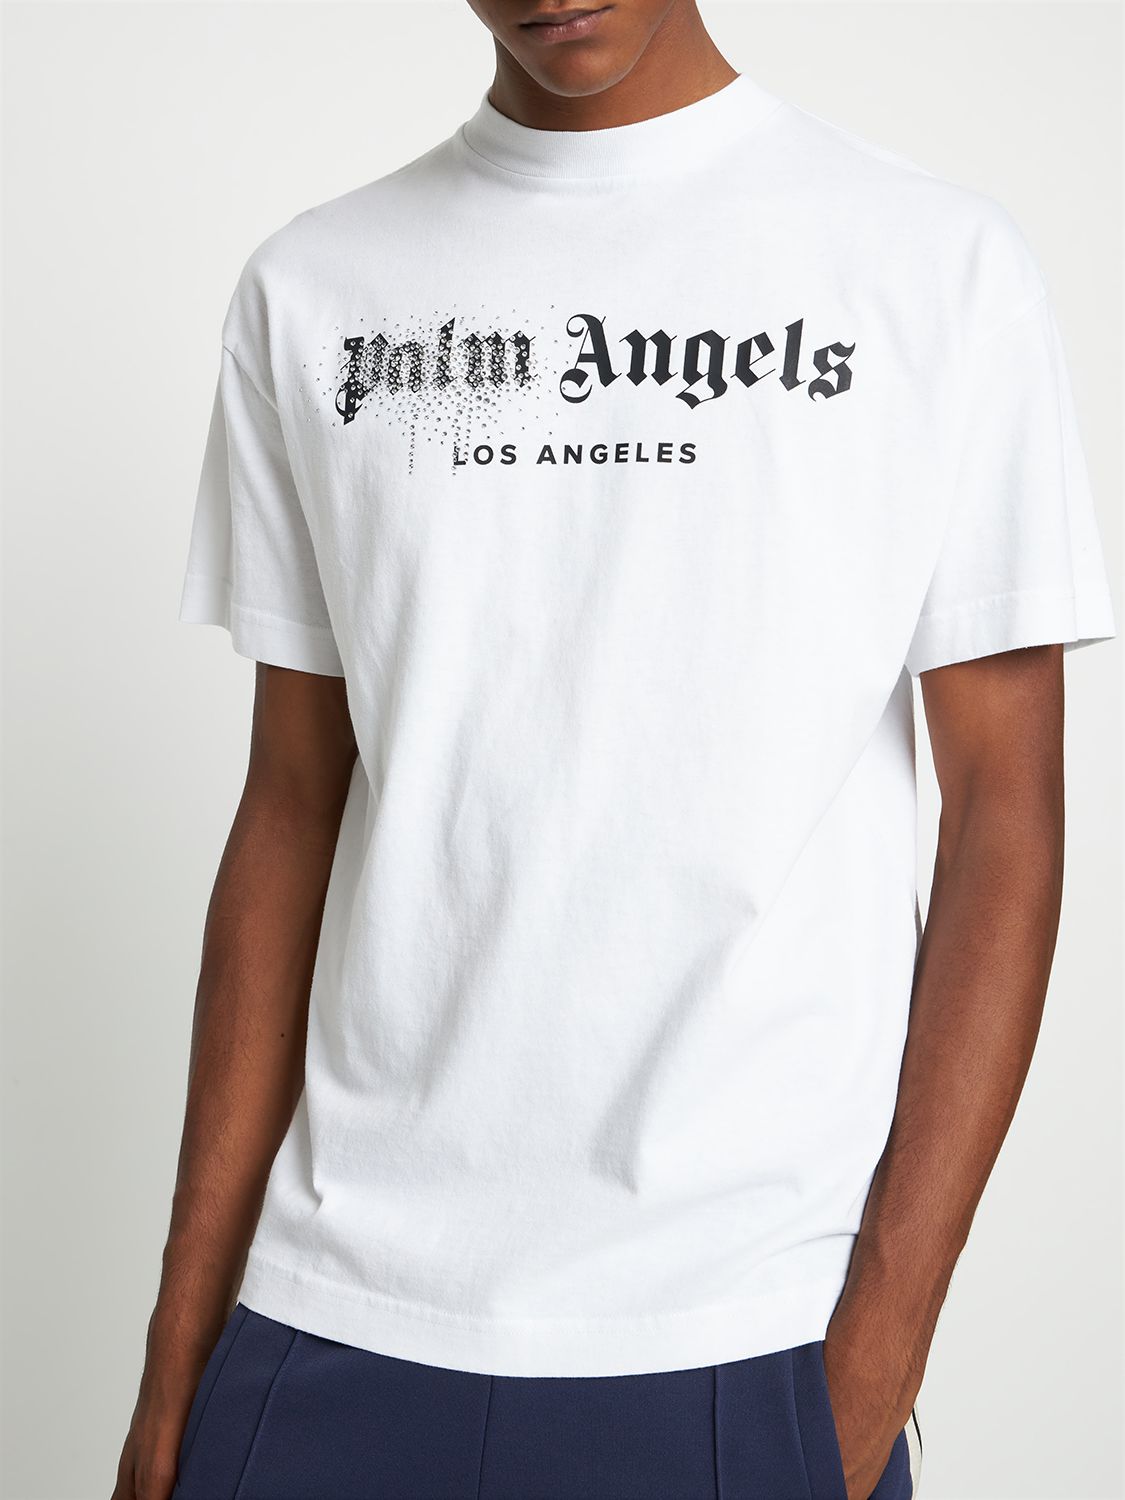 White Classic logo-print cotton-jersey T-shirt, Palm Angels